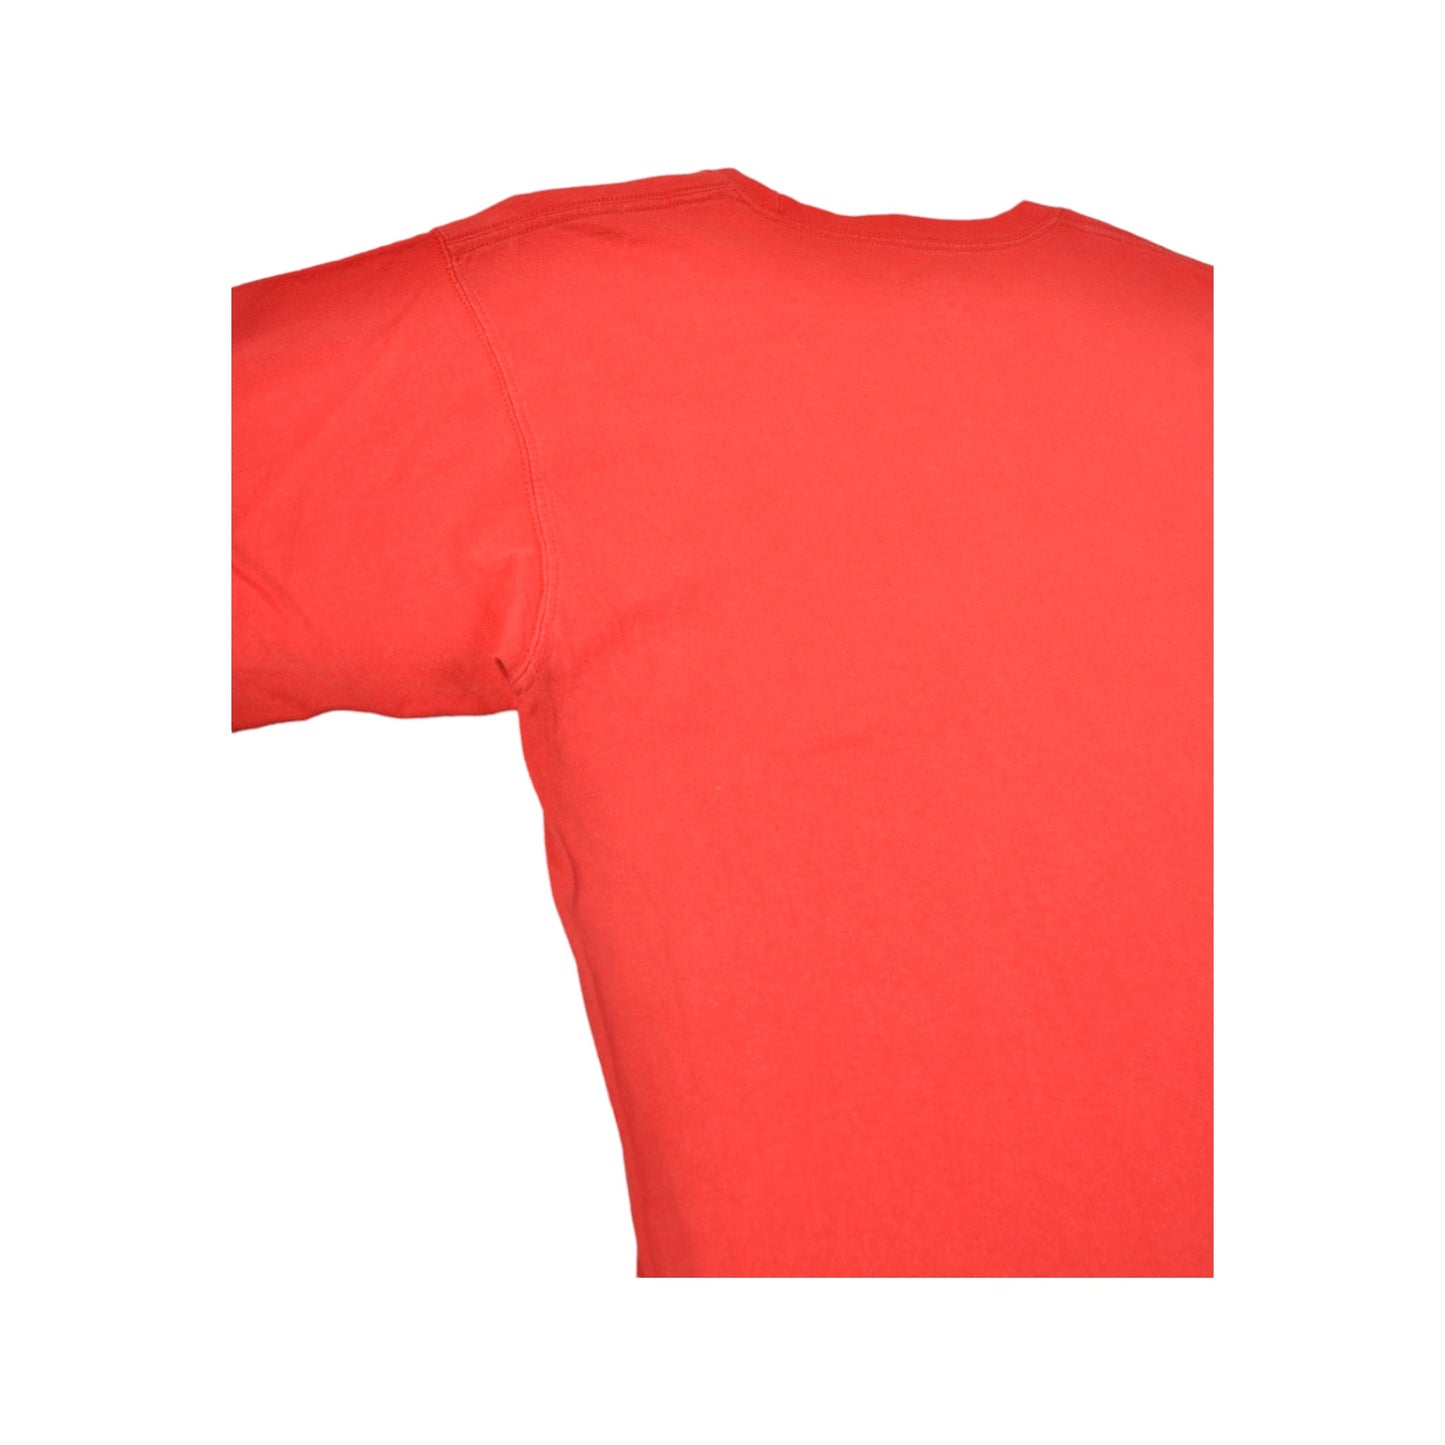 Vintage Champion T-Shirt Red Medium